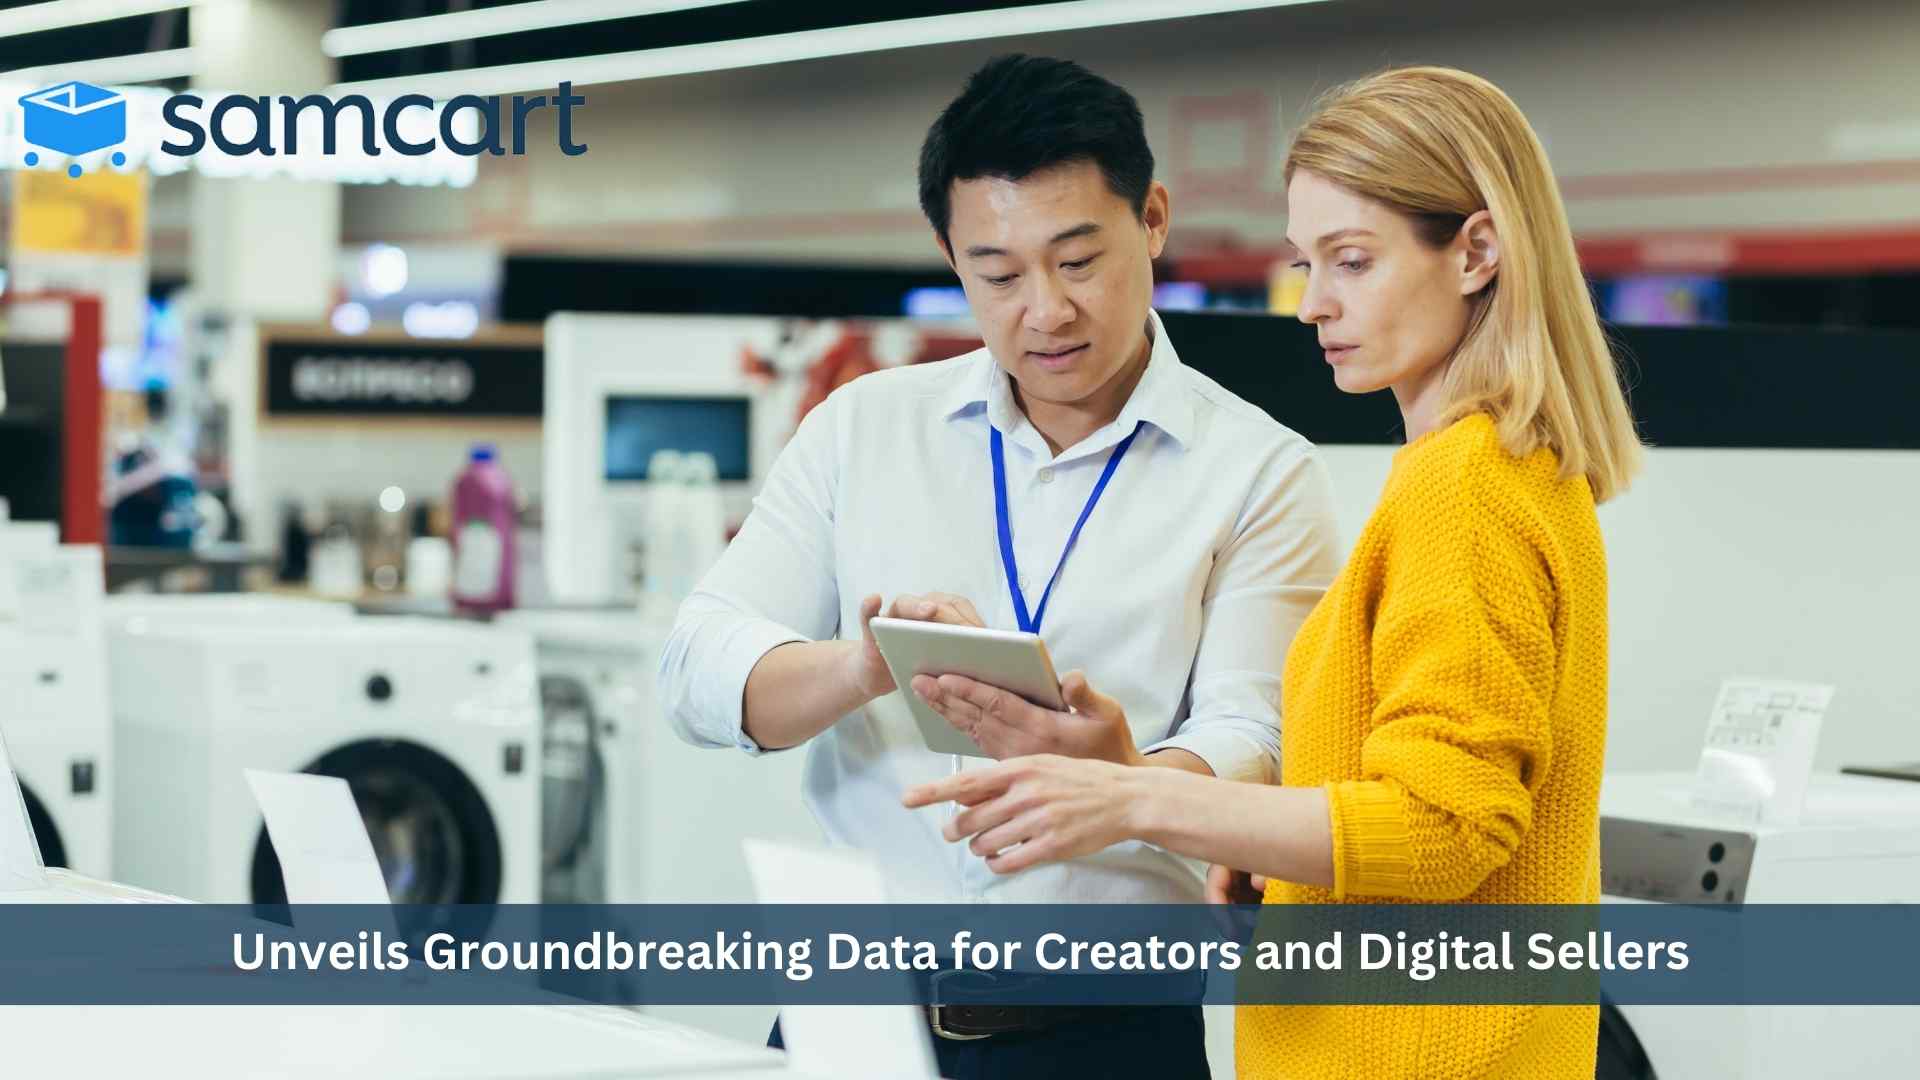 SamCart Unveils Groundbreaking Data for Creators and Digital Sellers in Their 